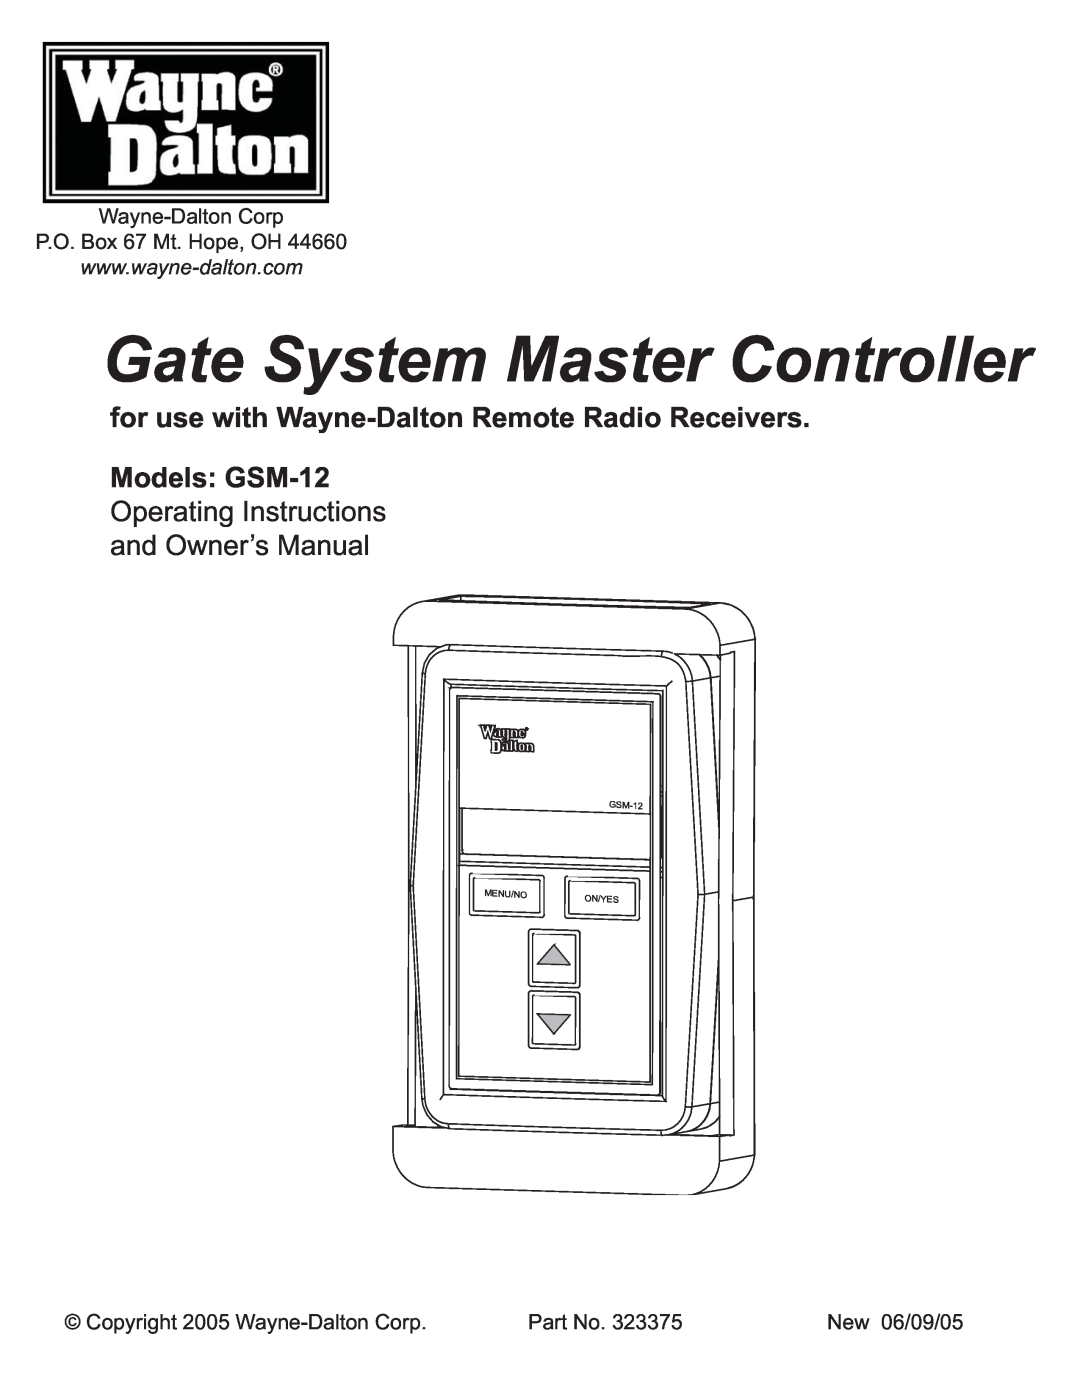 Wayne-Dalton operating instructions for use with Wayne-DaltonRemote Radio Receivers, Models GSM-12, Menu/No 